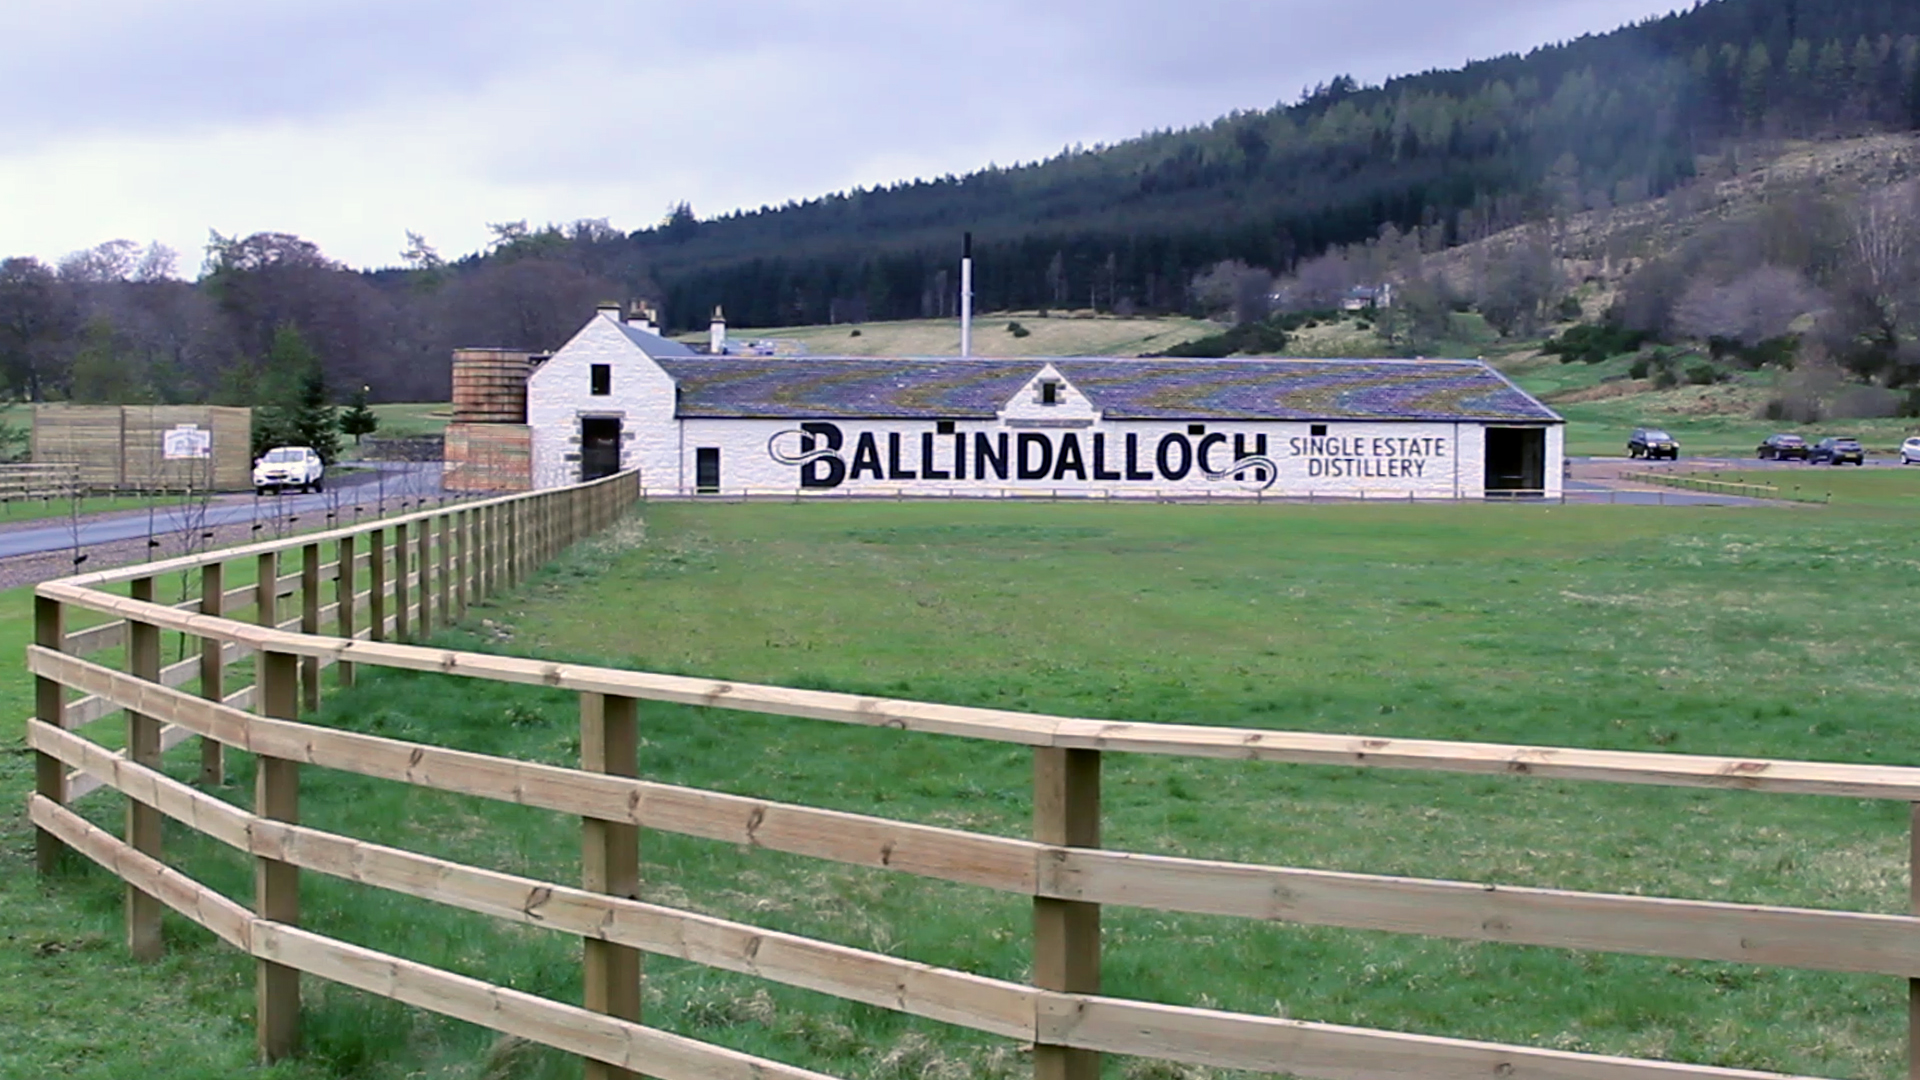 The Ballindalloch Distillery in Speyside. Photo ©2015 by Mark Gillespie.